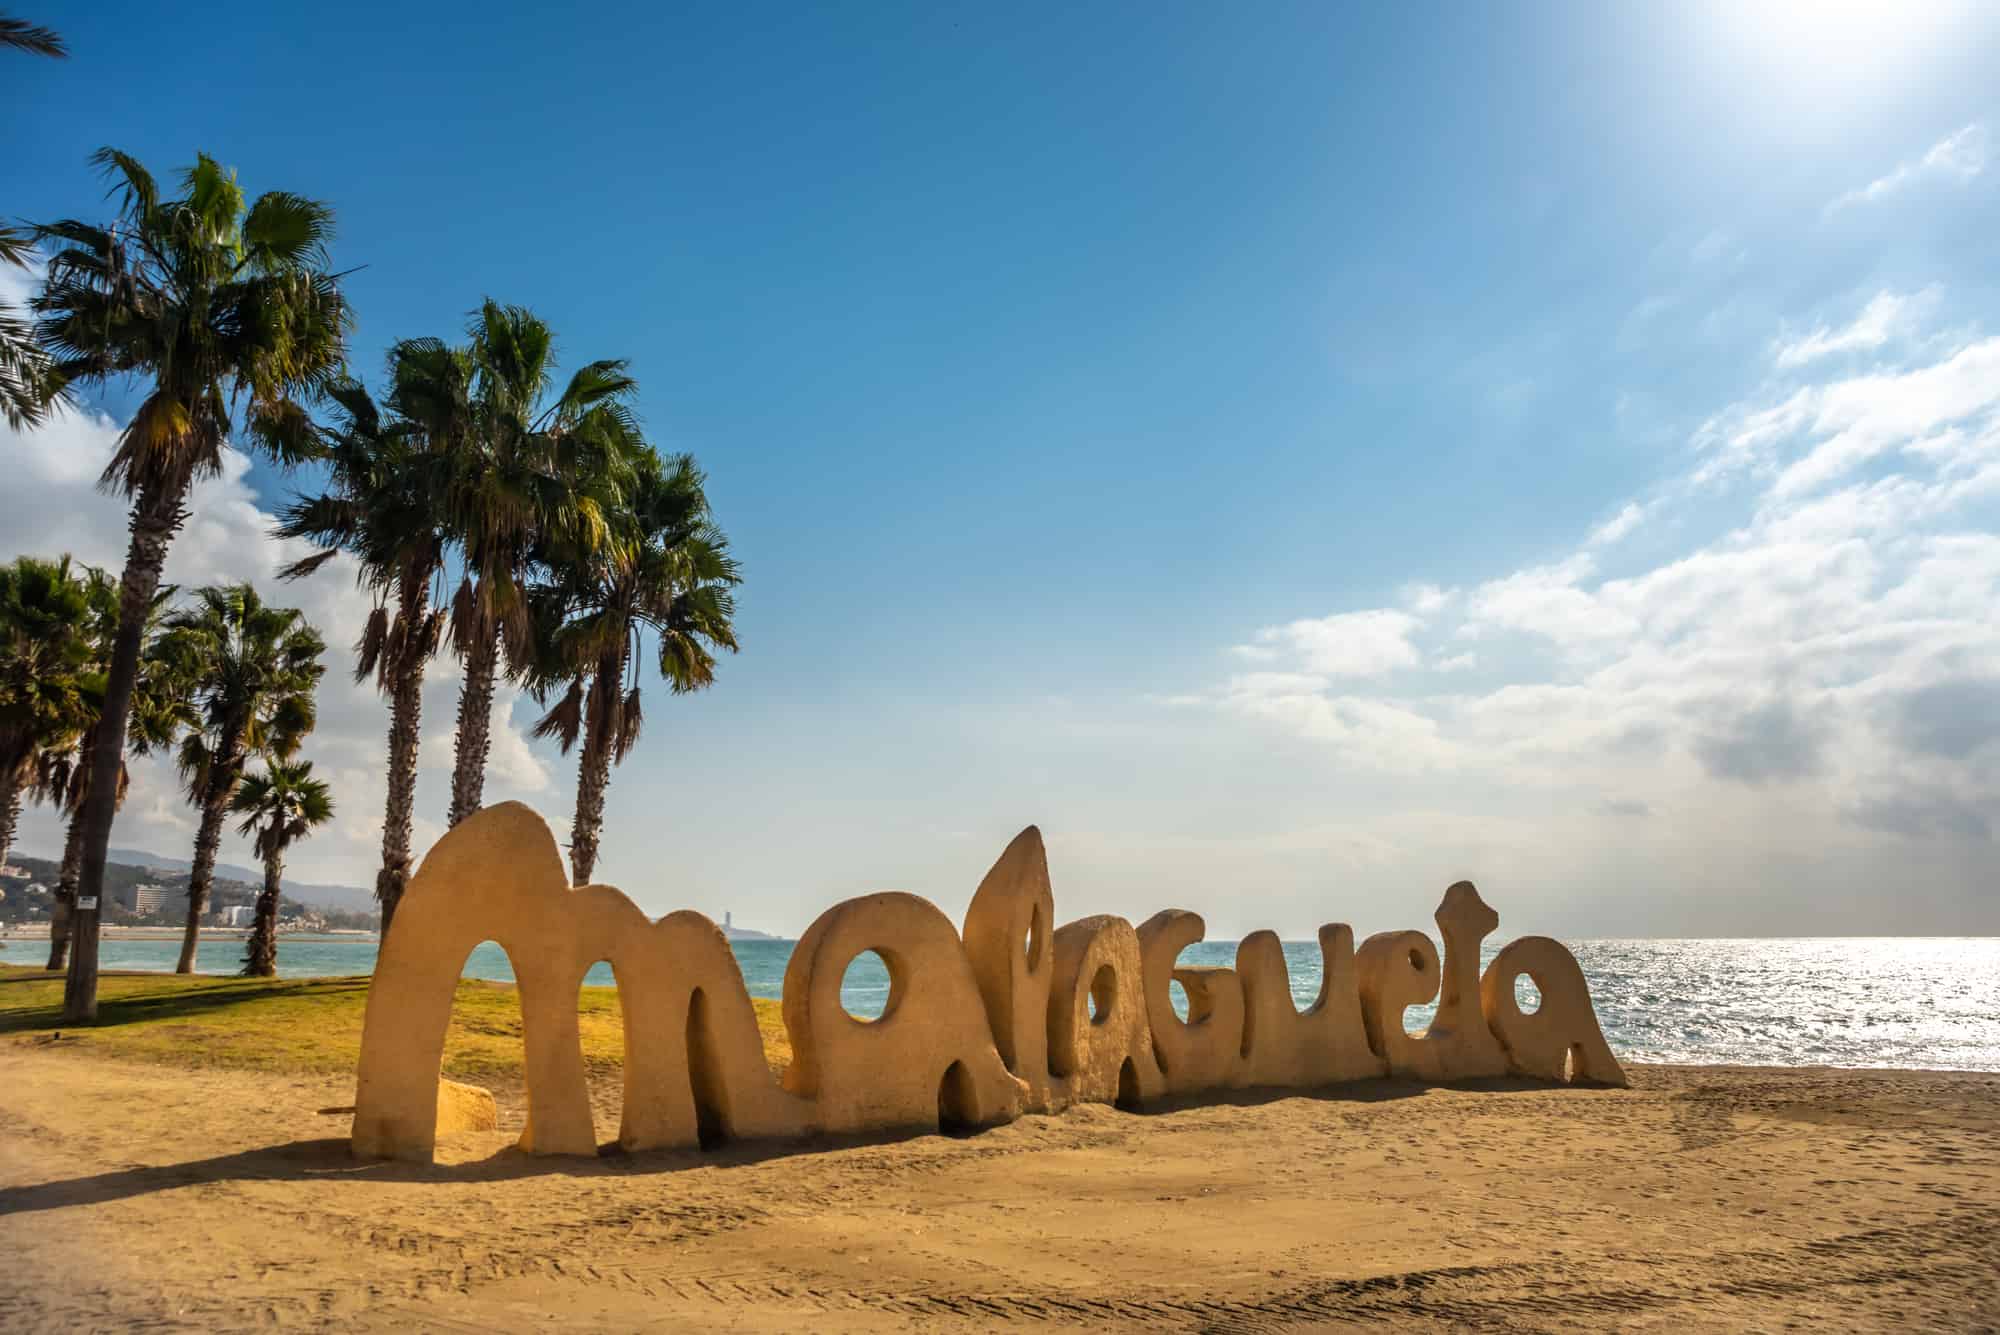 Malagueta sign at Malaga beach Costa del Sol Spain 